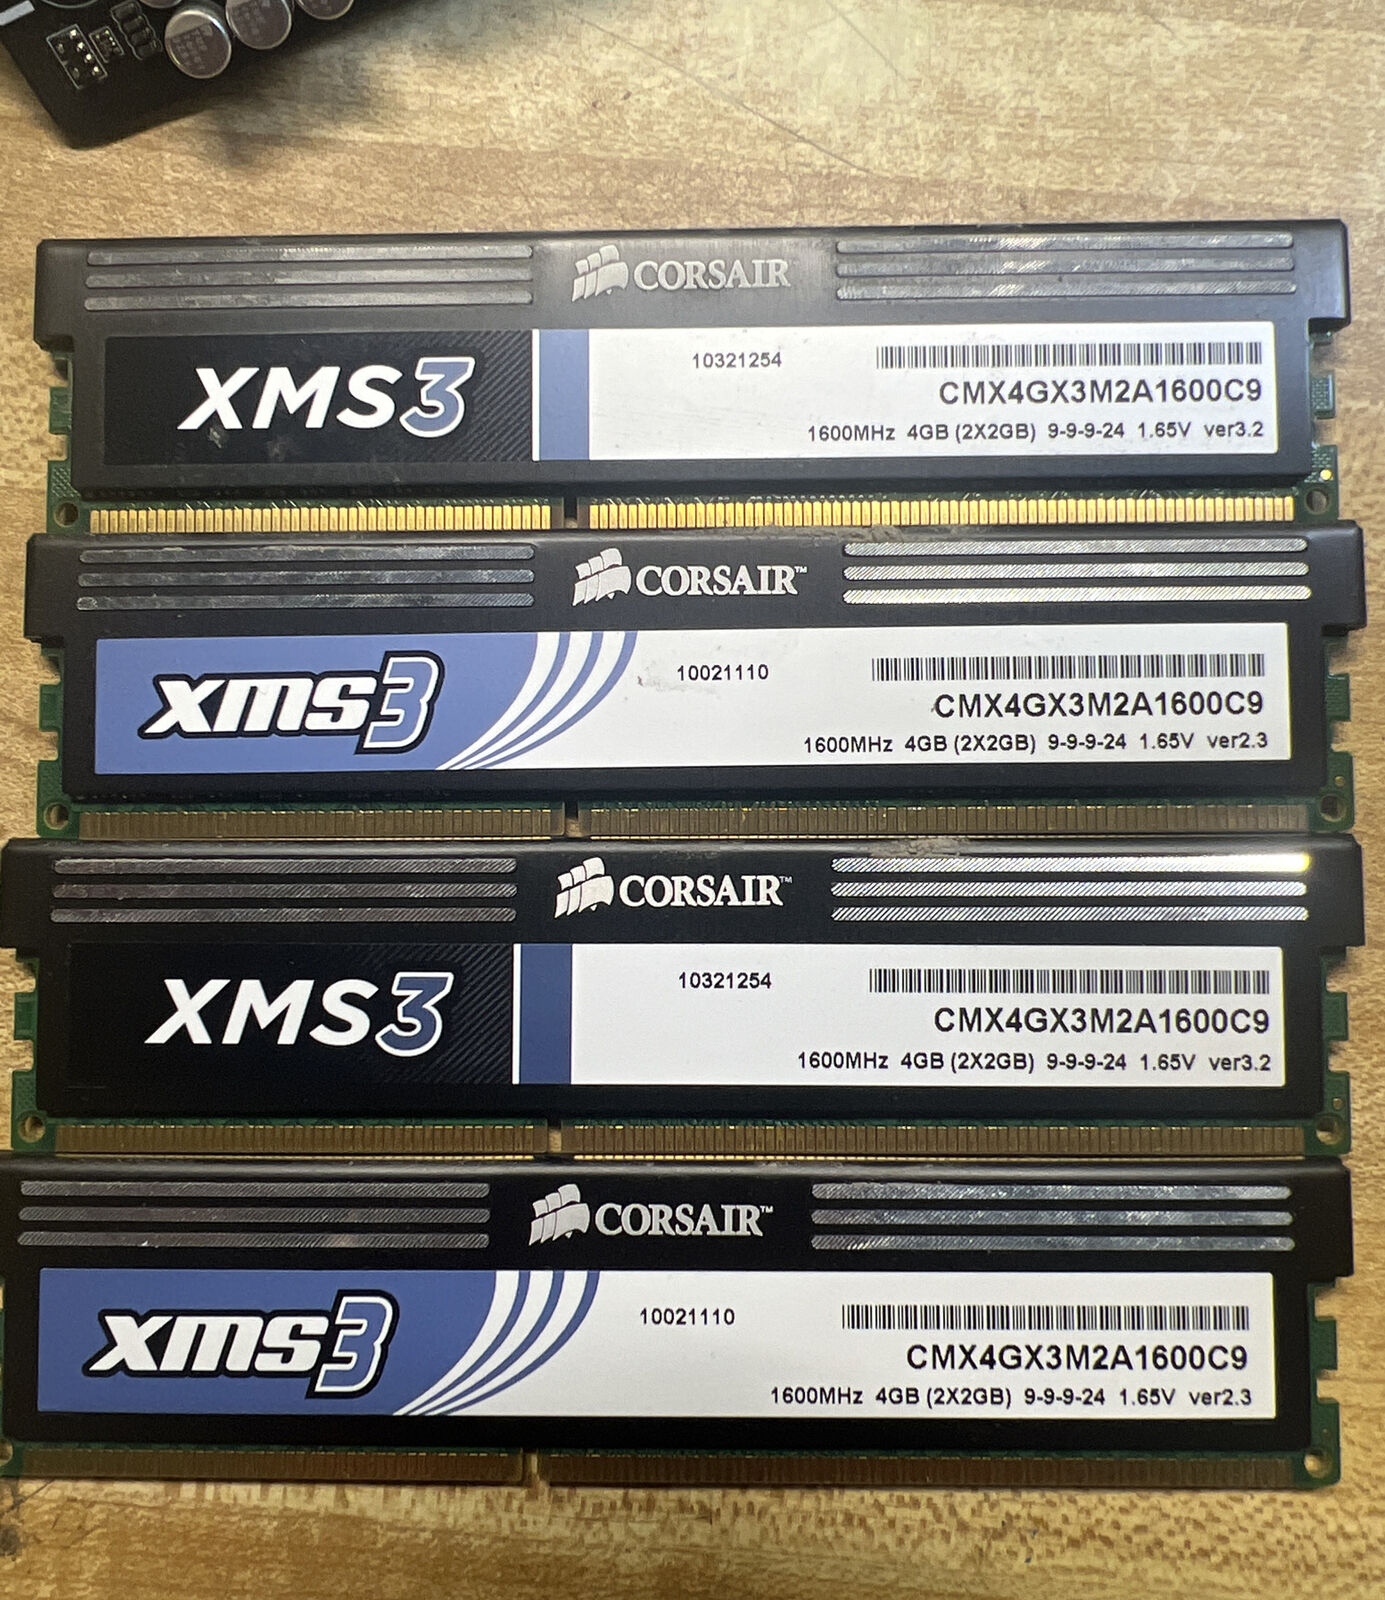 Corsair XMS3 8GB (4x2GB) DDR3 1600MHz C9 Memory Kit CMX4GX3M2A1600C9 9-9-9-24